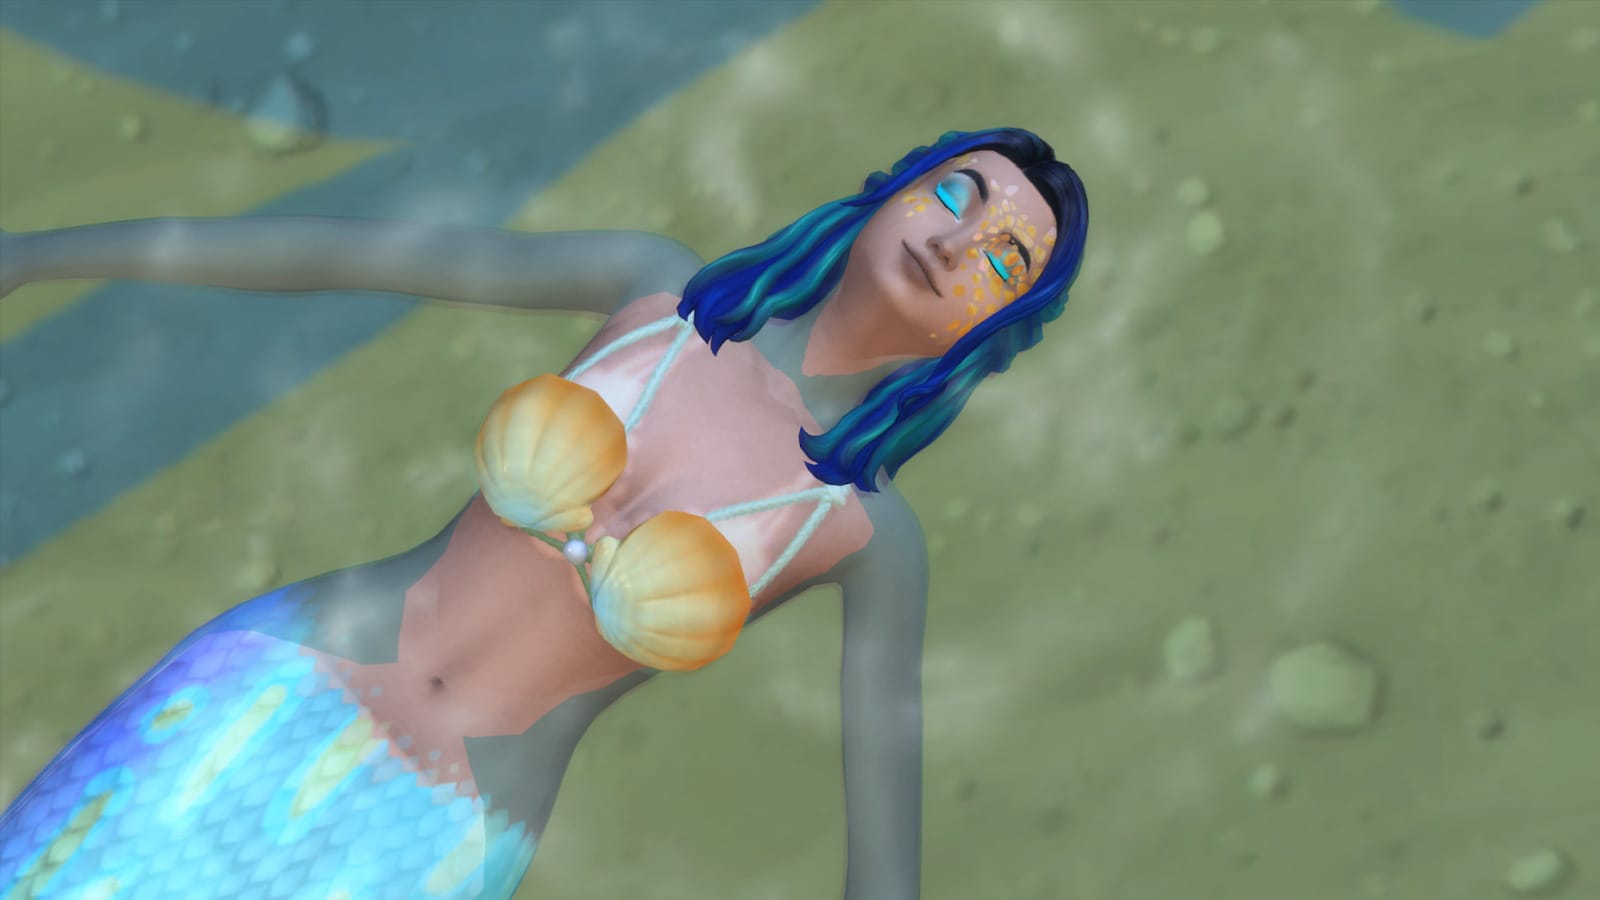 the Sims 4 mermaid 7